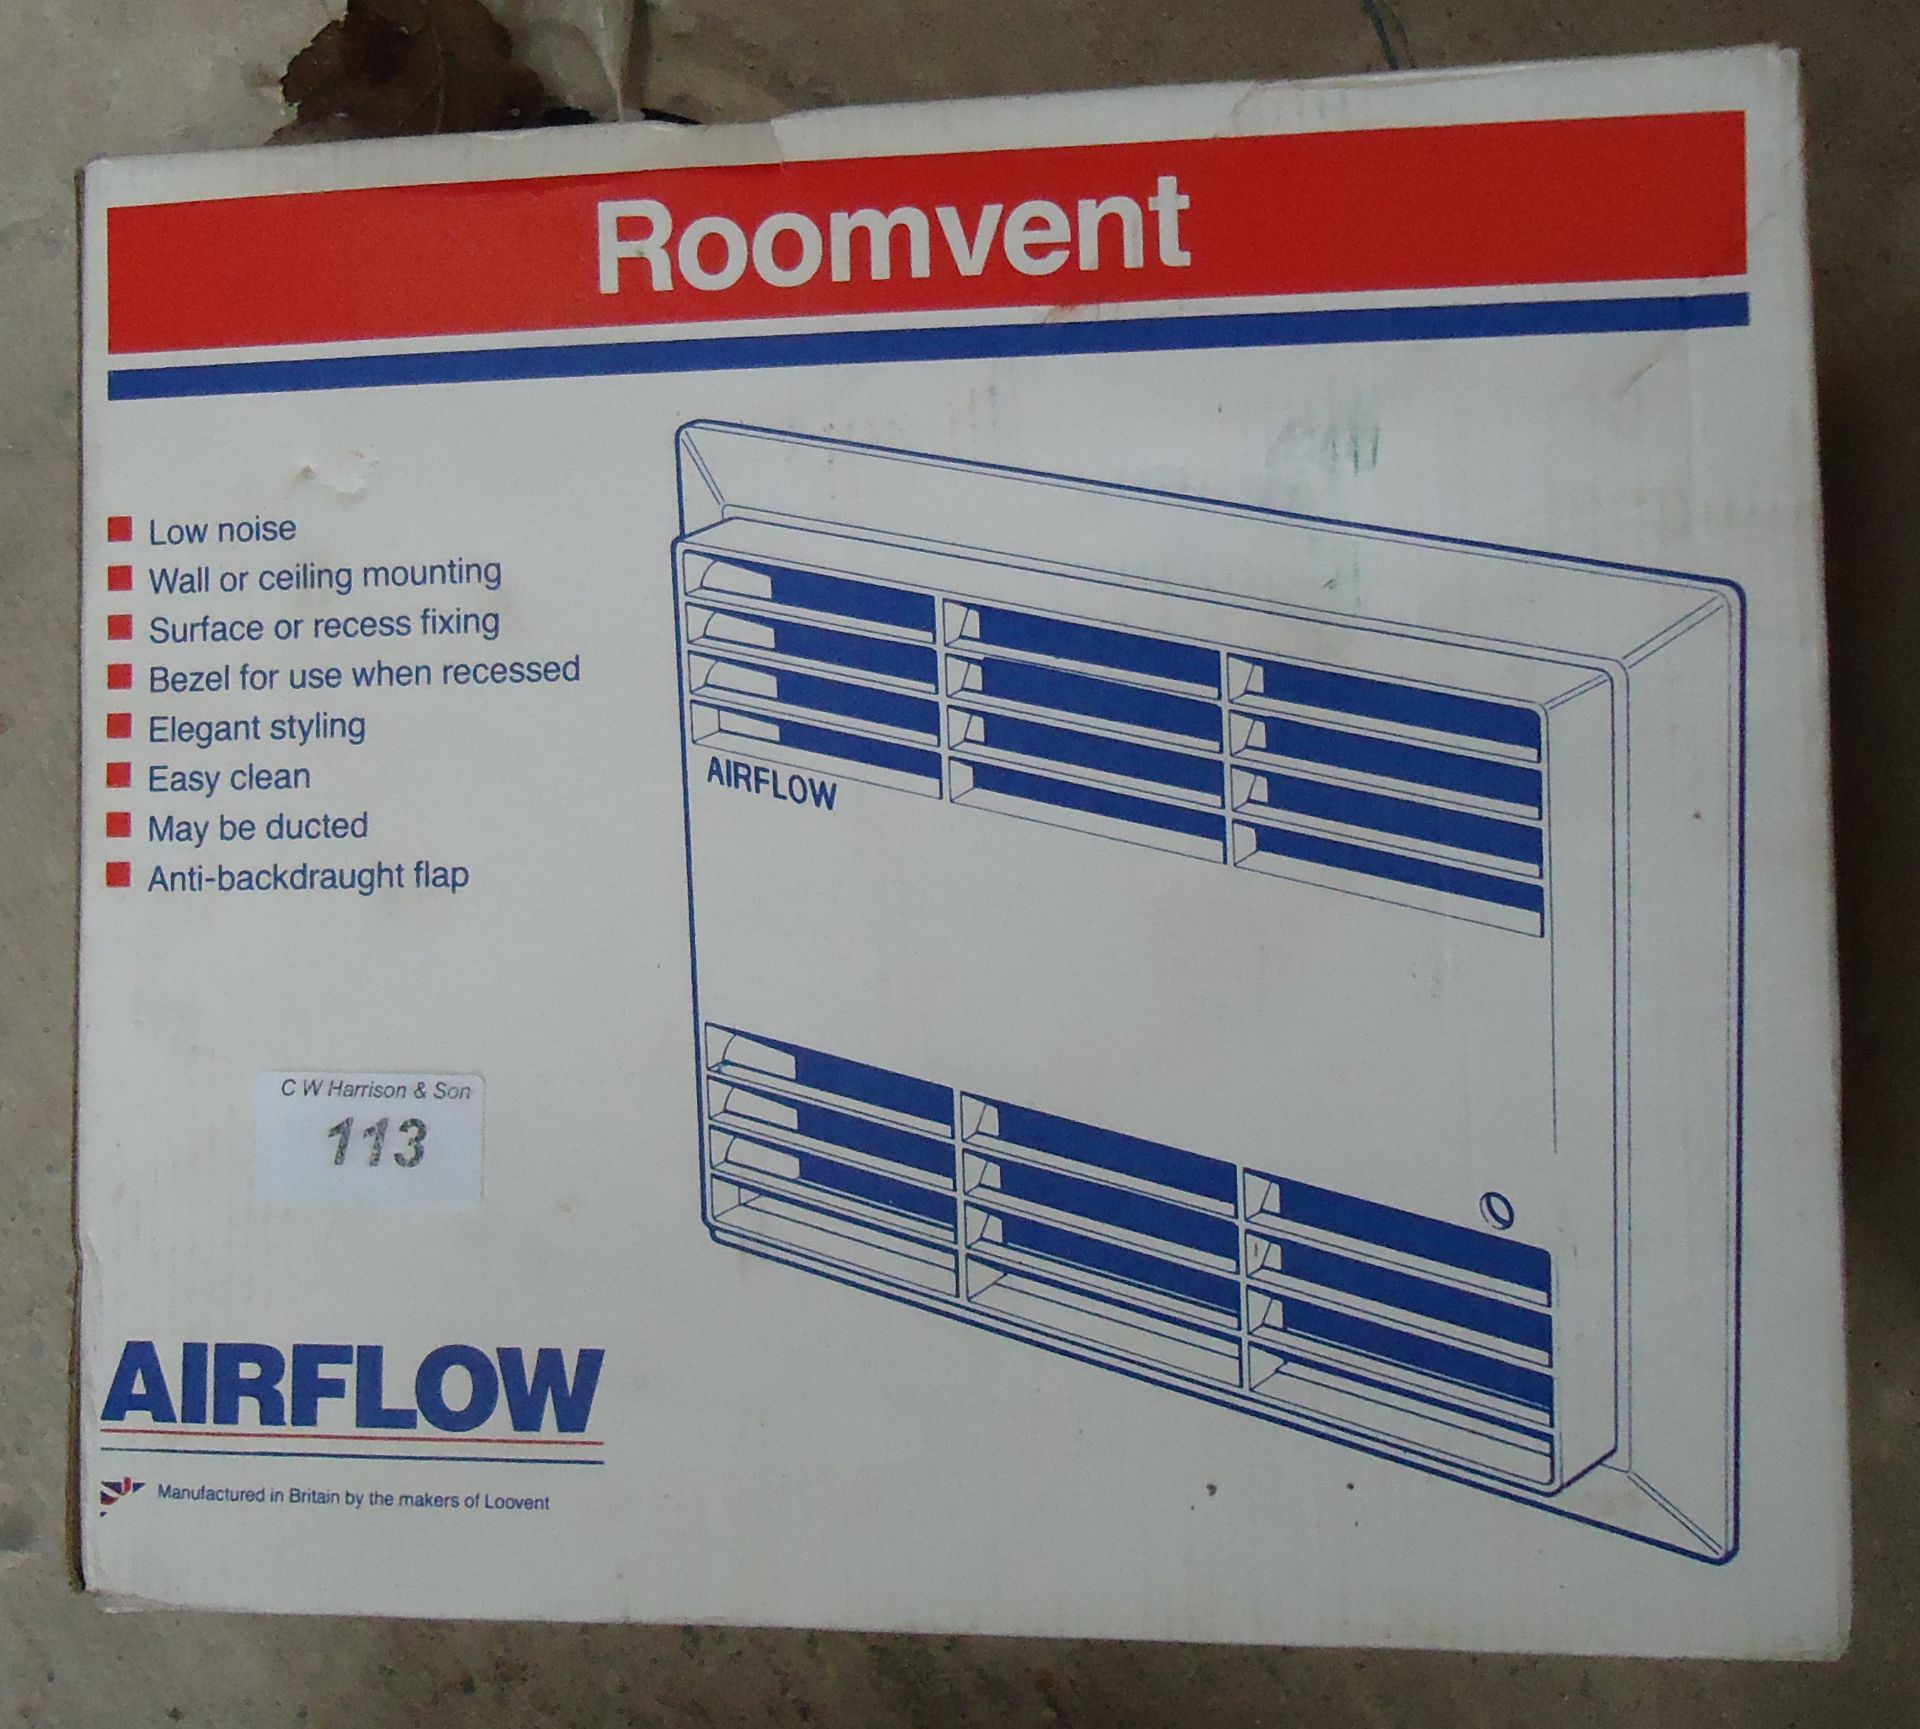 1 x Roomvent Airflow Fan